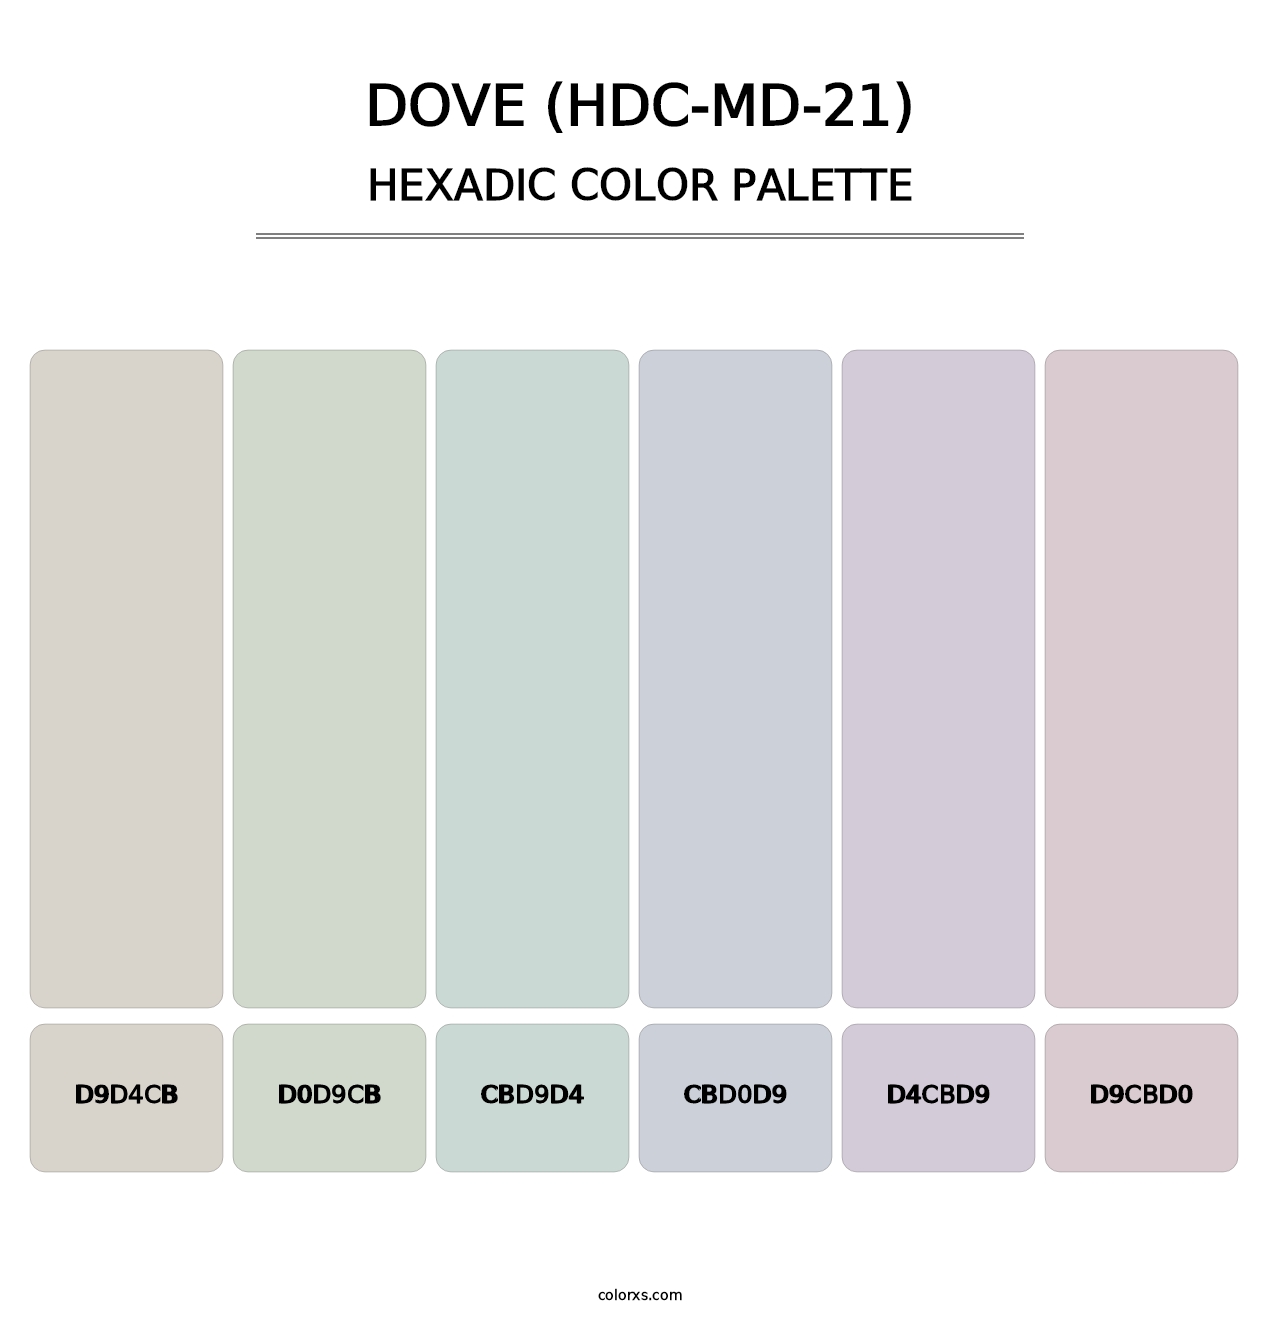 Dove (HDC-MD-21) - Hexadic Color Palette